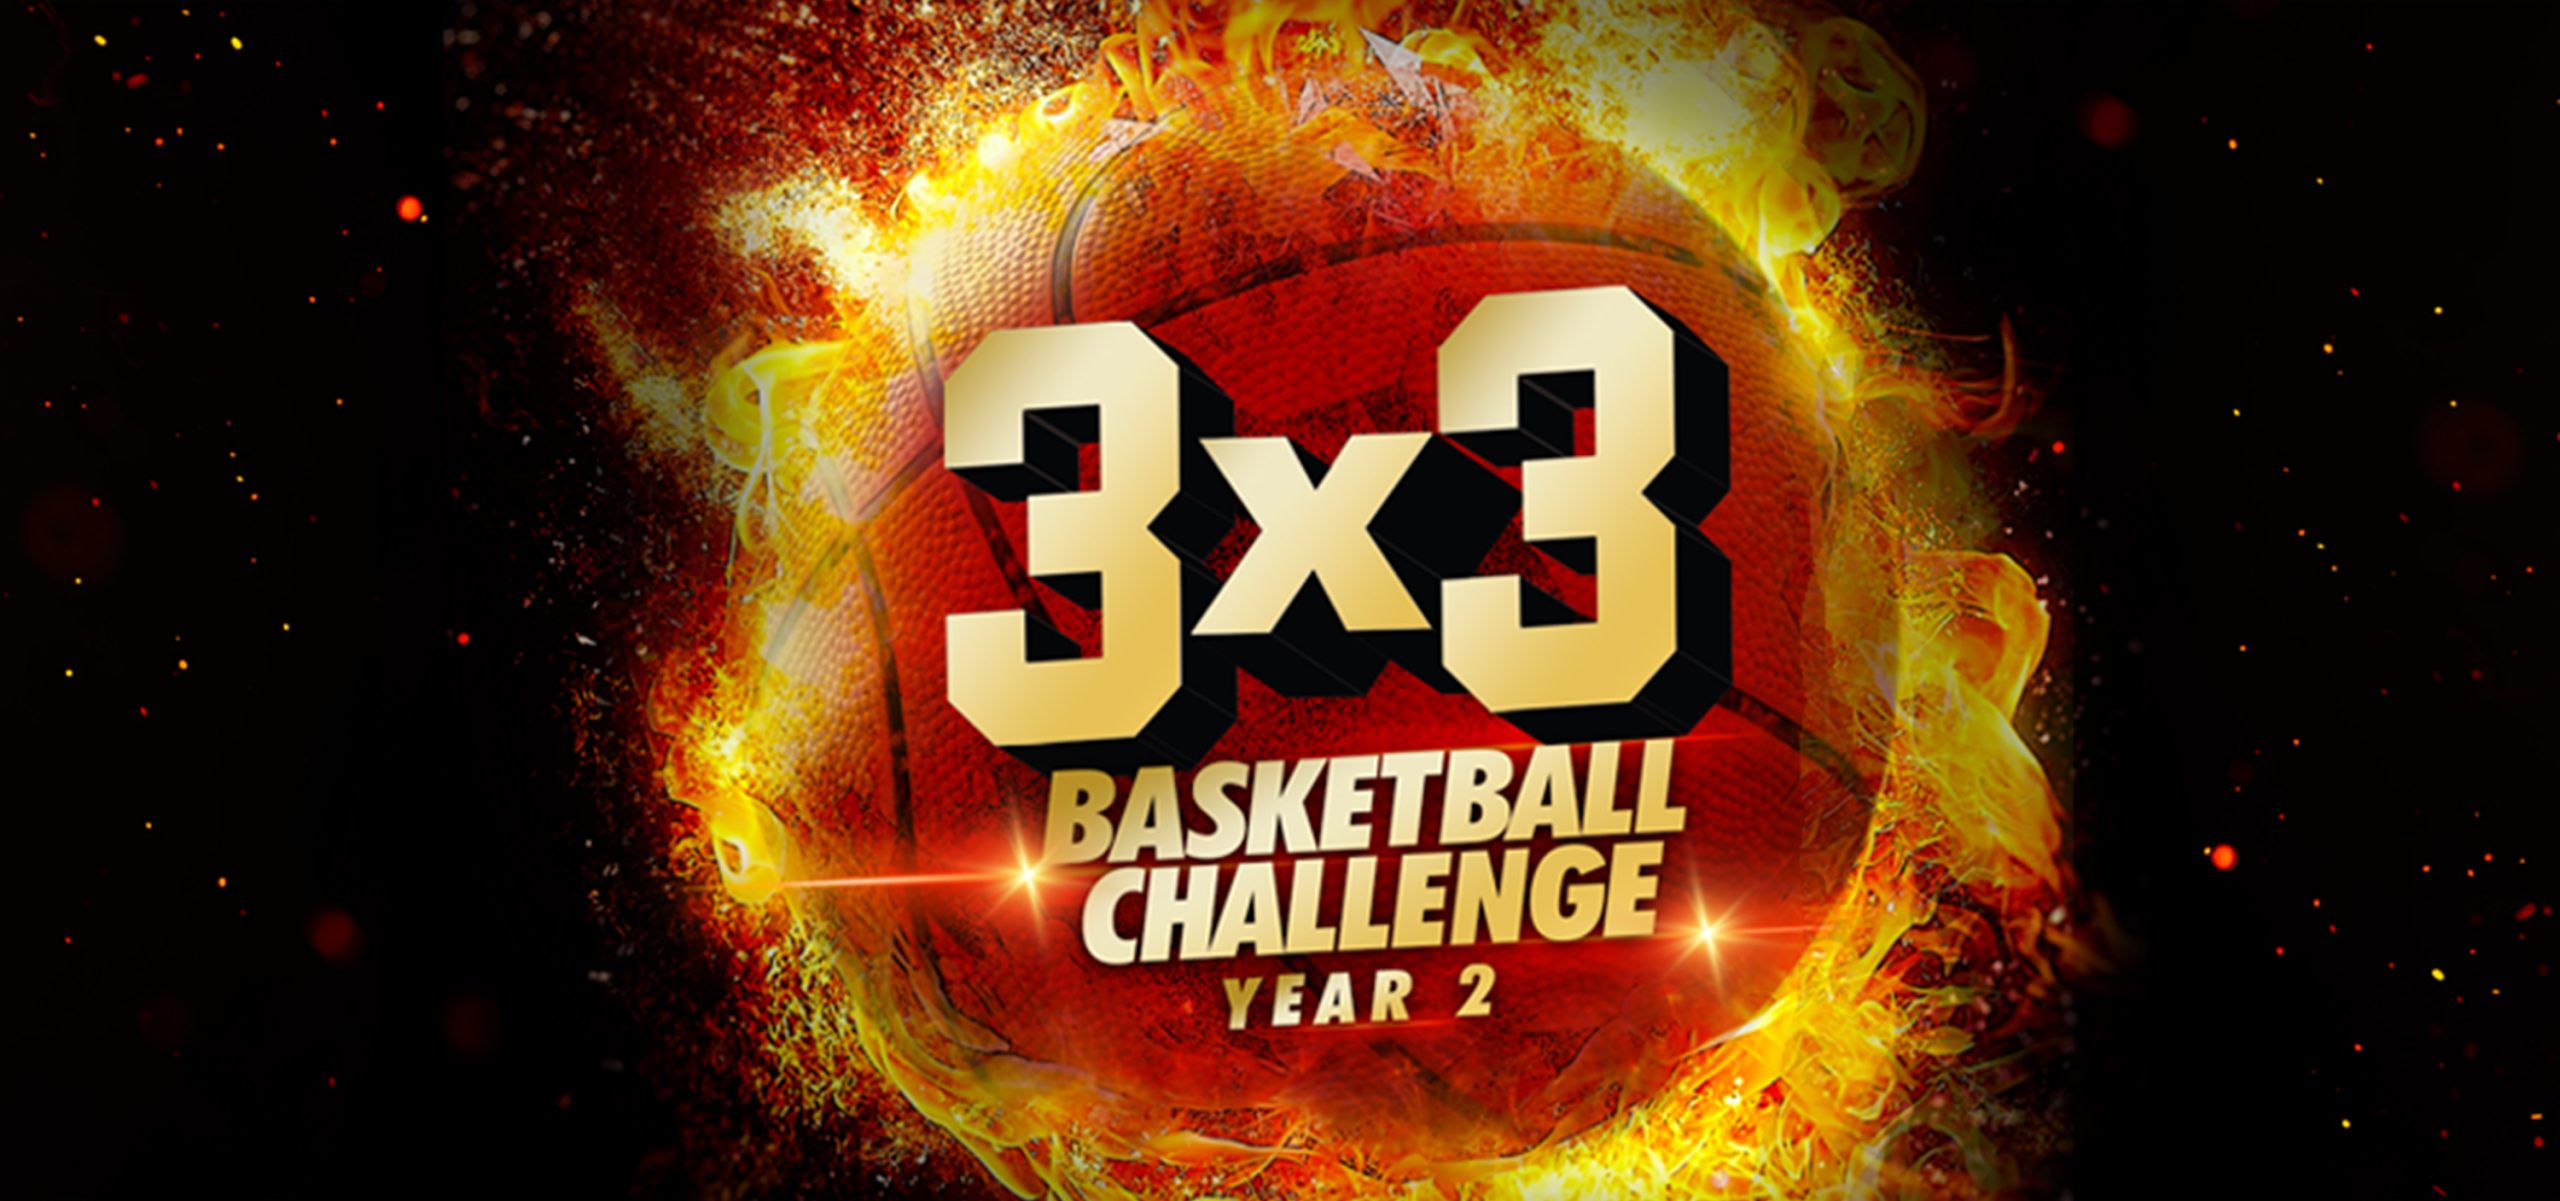 vivo 3x3 Basketball Challenge no logo scaled